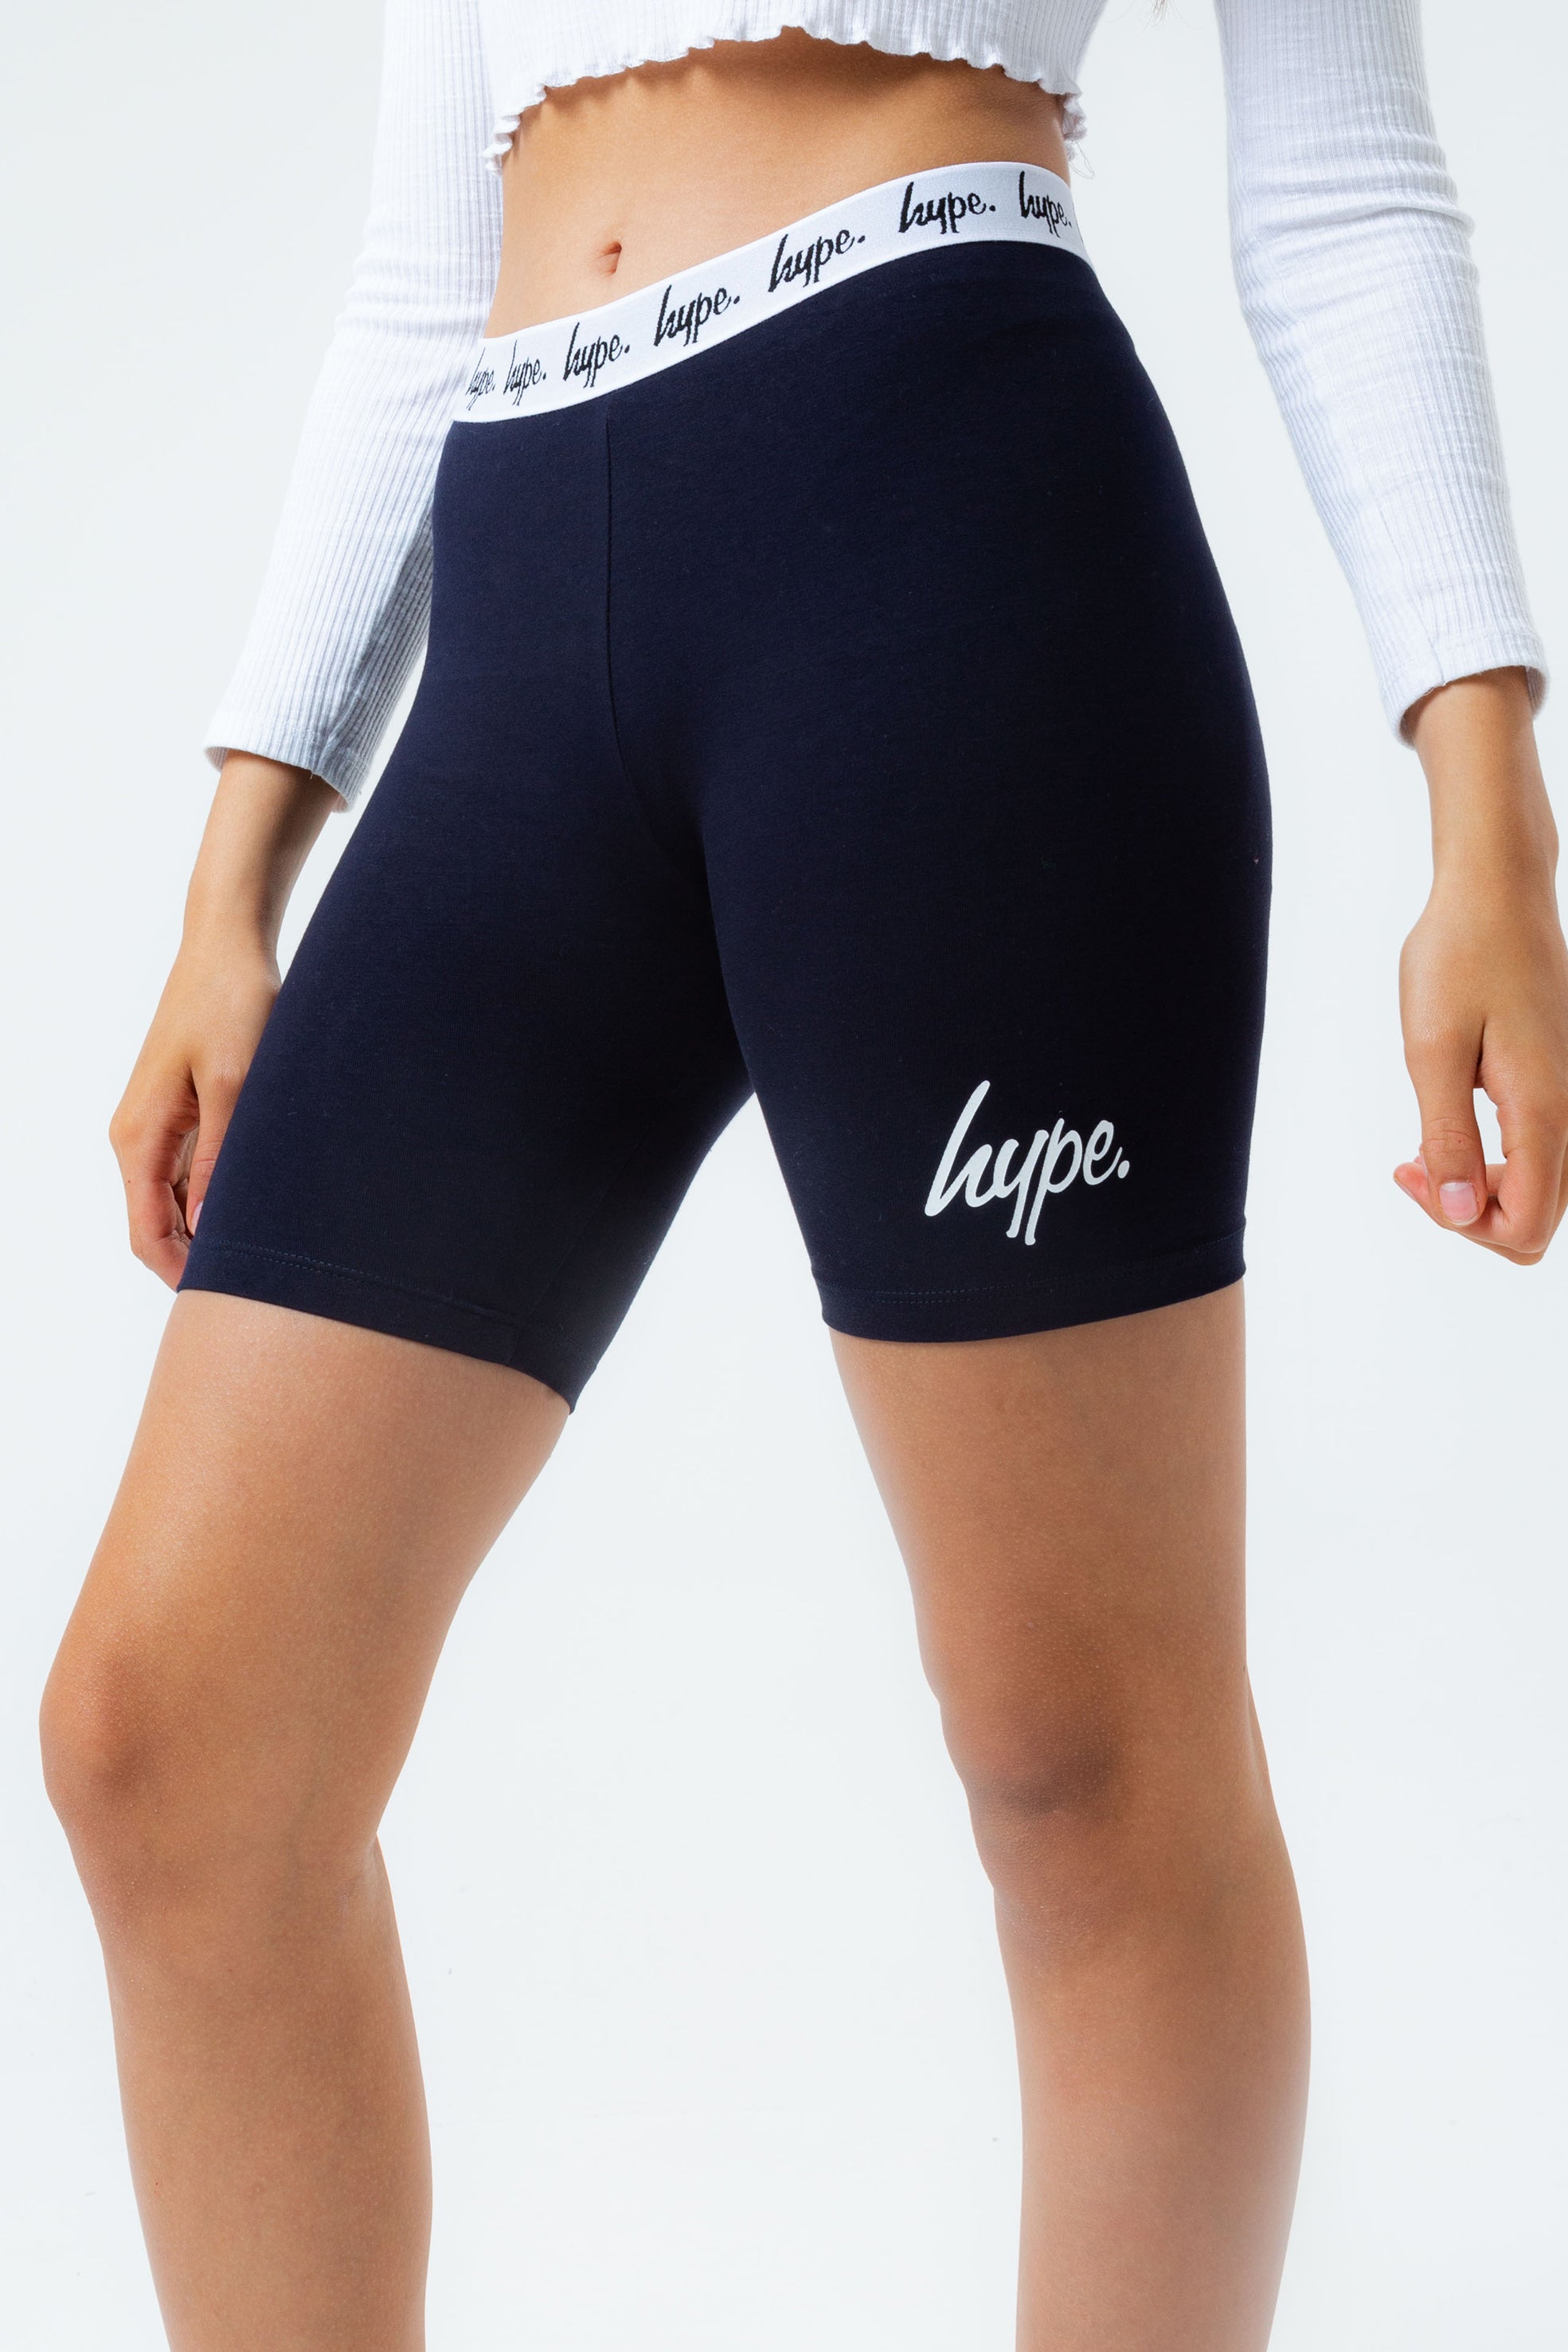 hype navy script girls cycle shorts